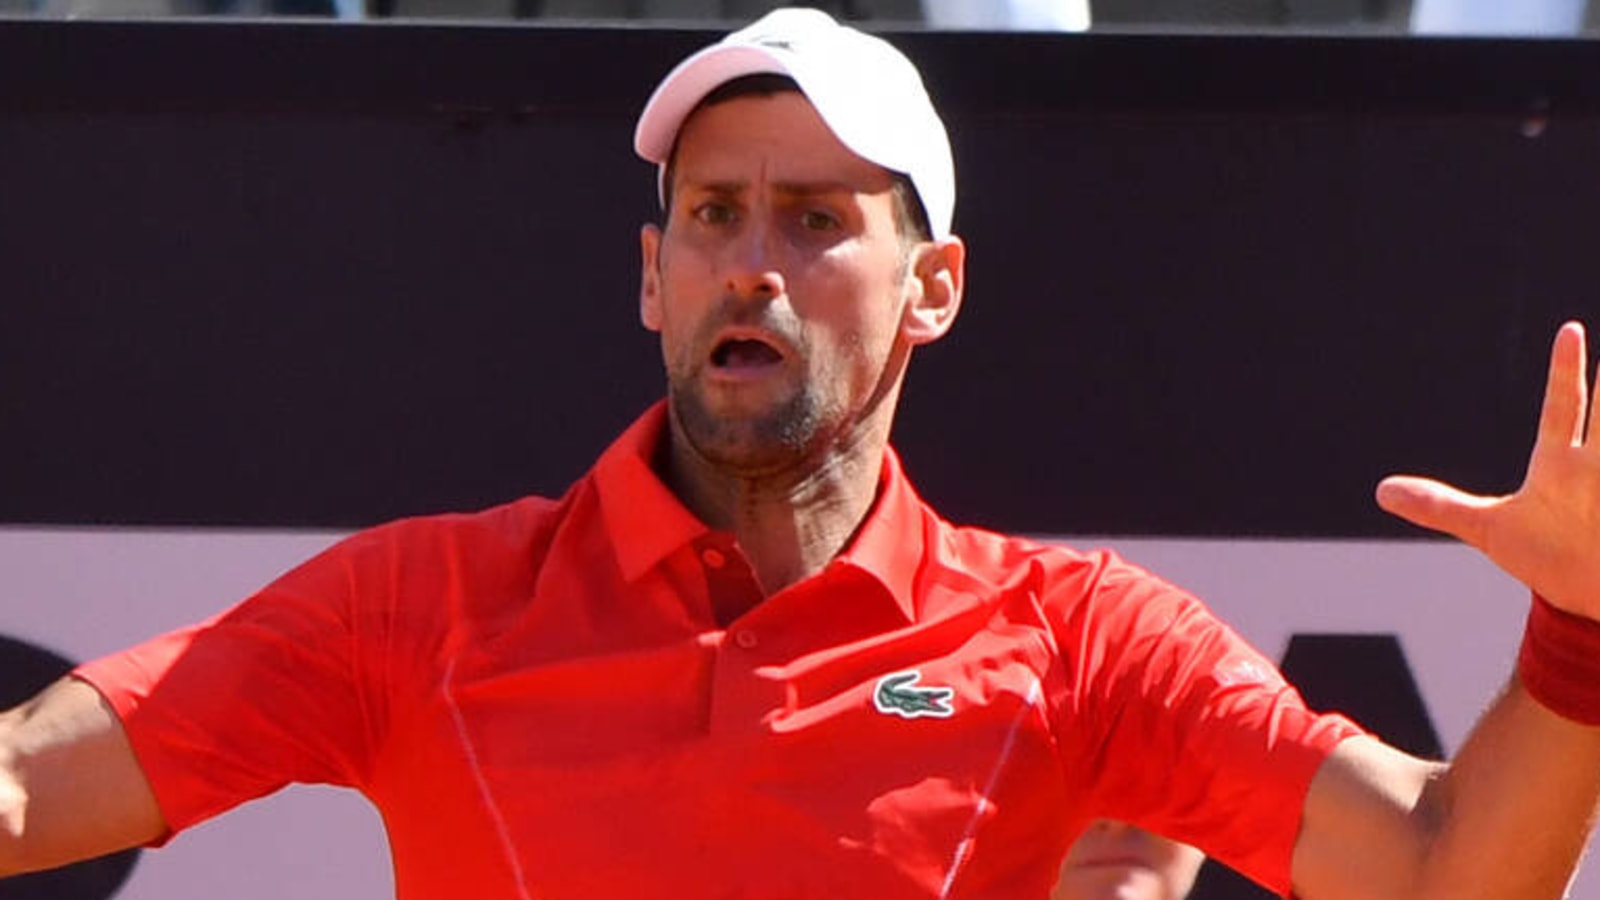 REVEALED: Novak Djokovic firmly believes he needs to ‘change everything’ before Roland Garros